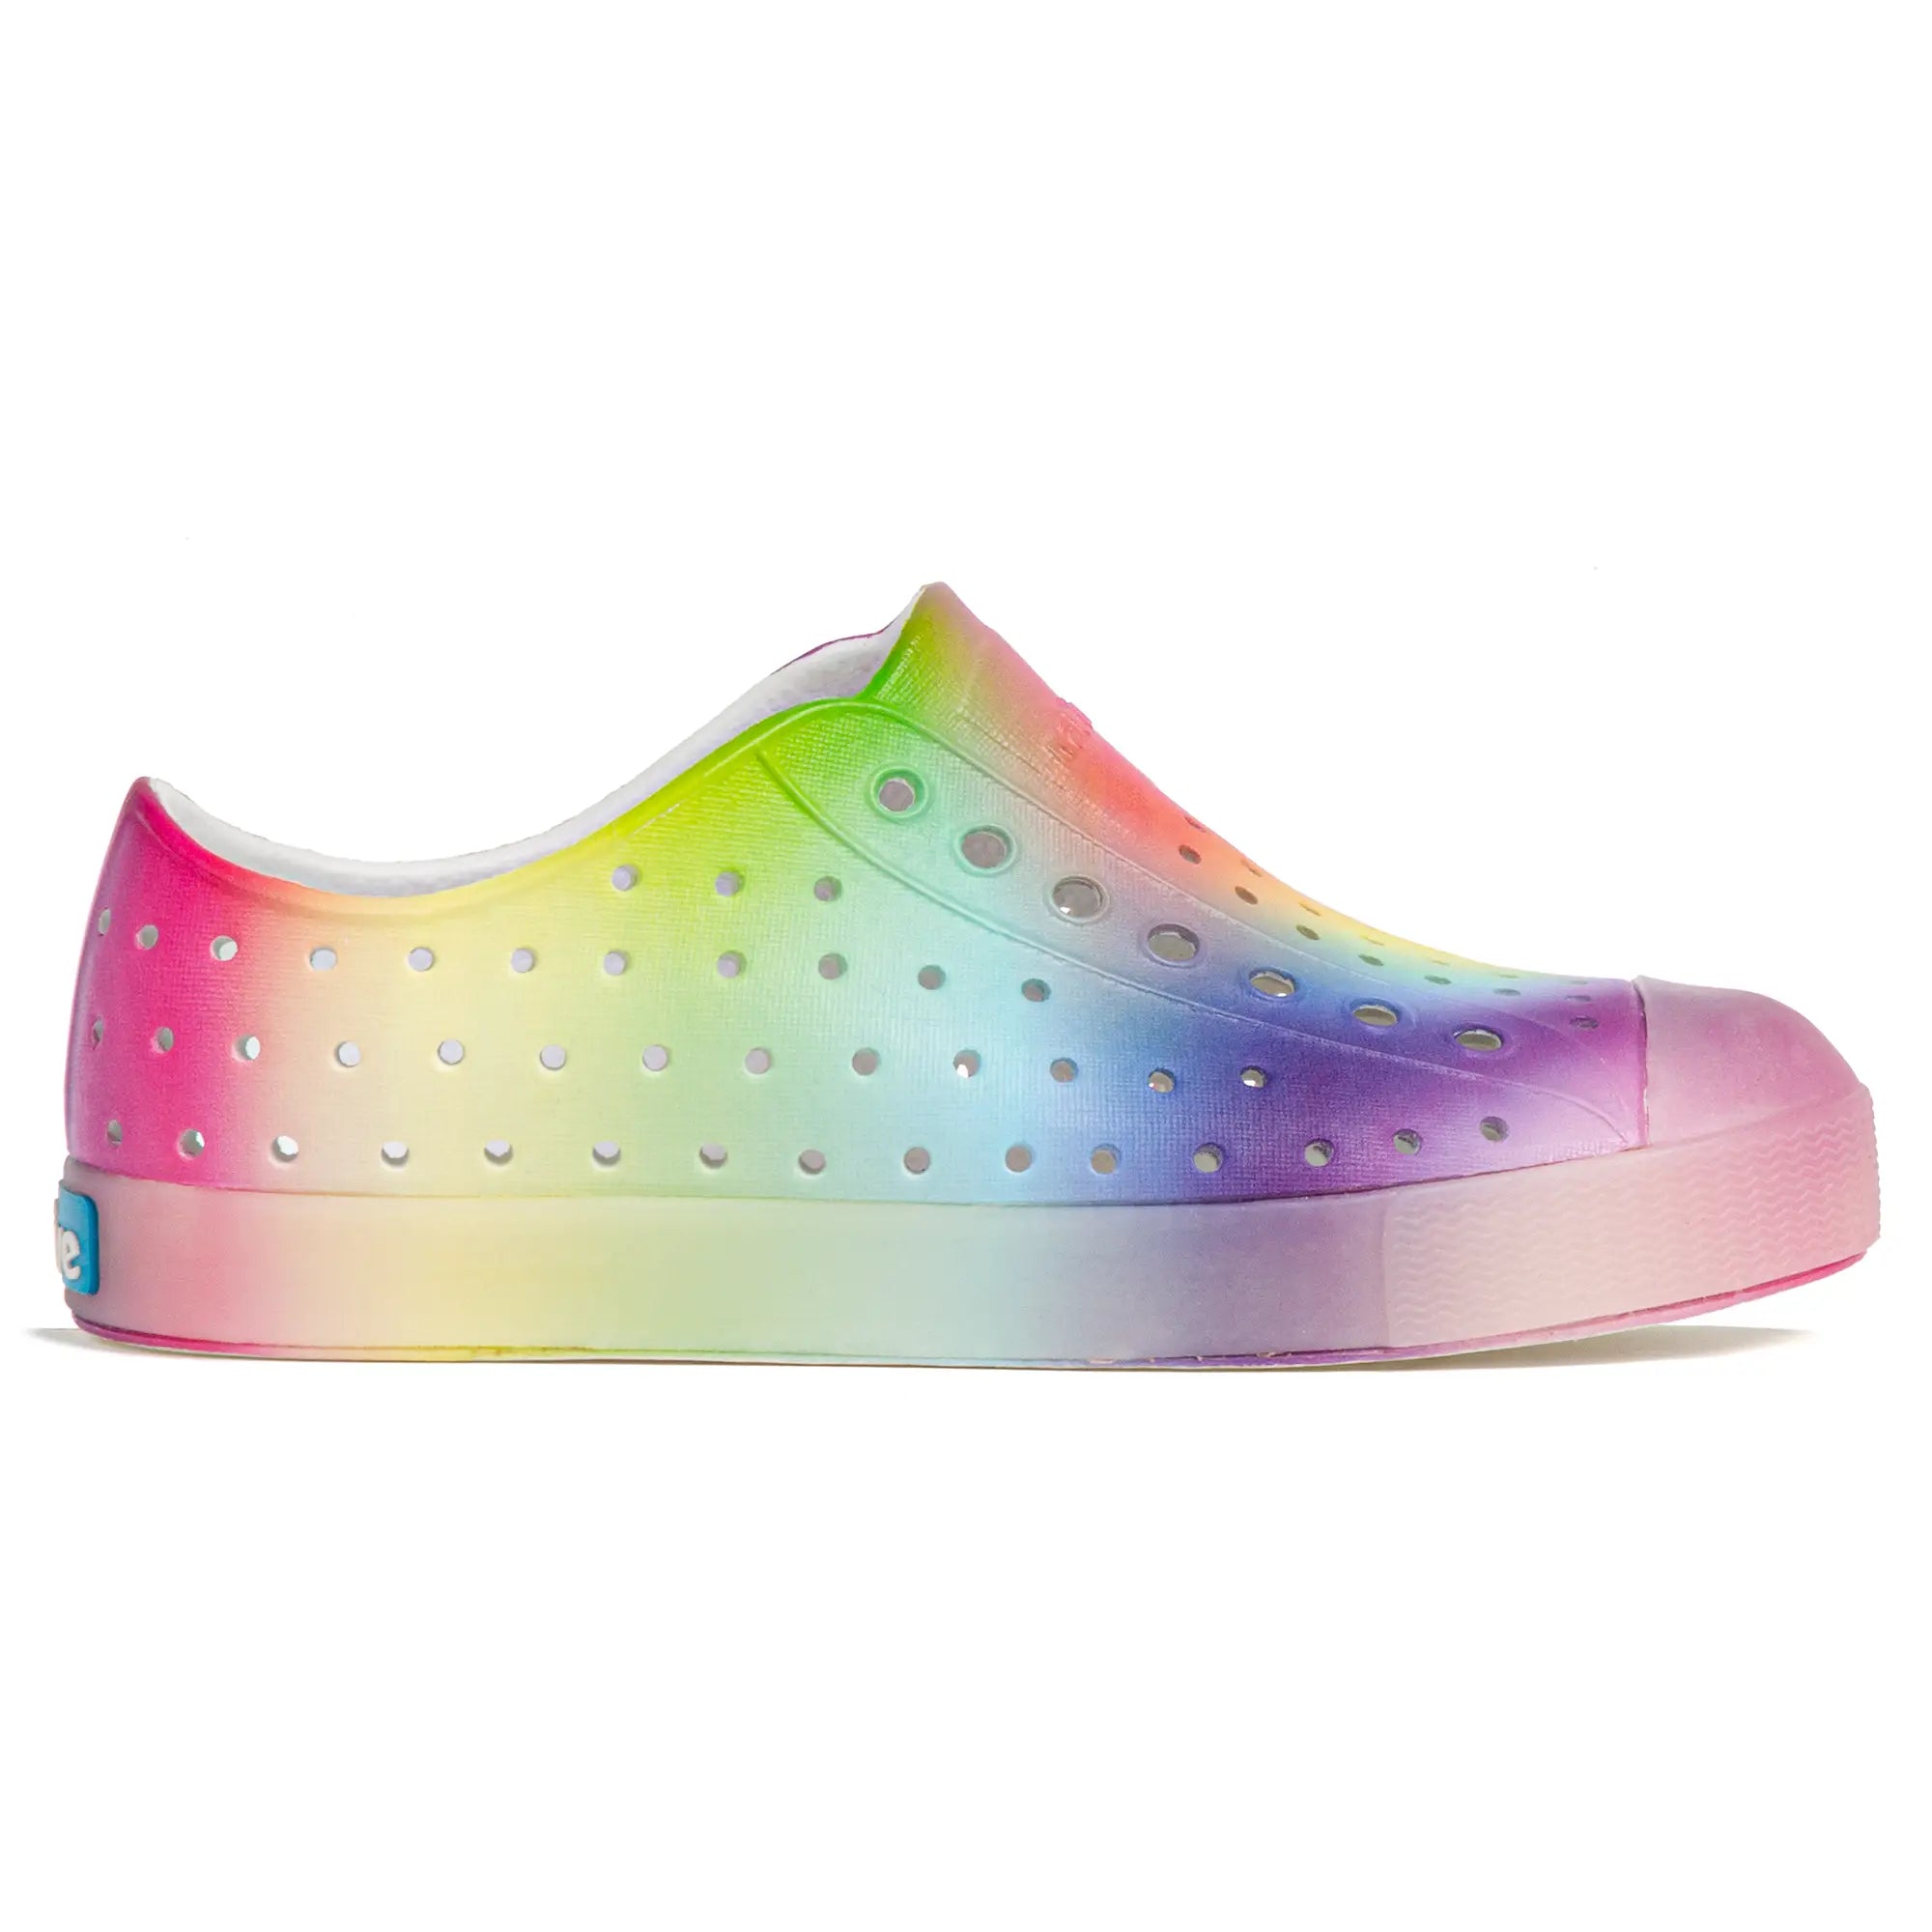 Toddler Jefferson Water shoe - Rainbow